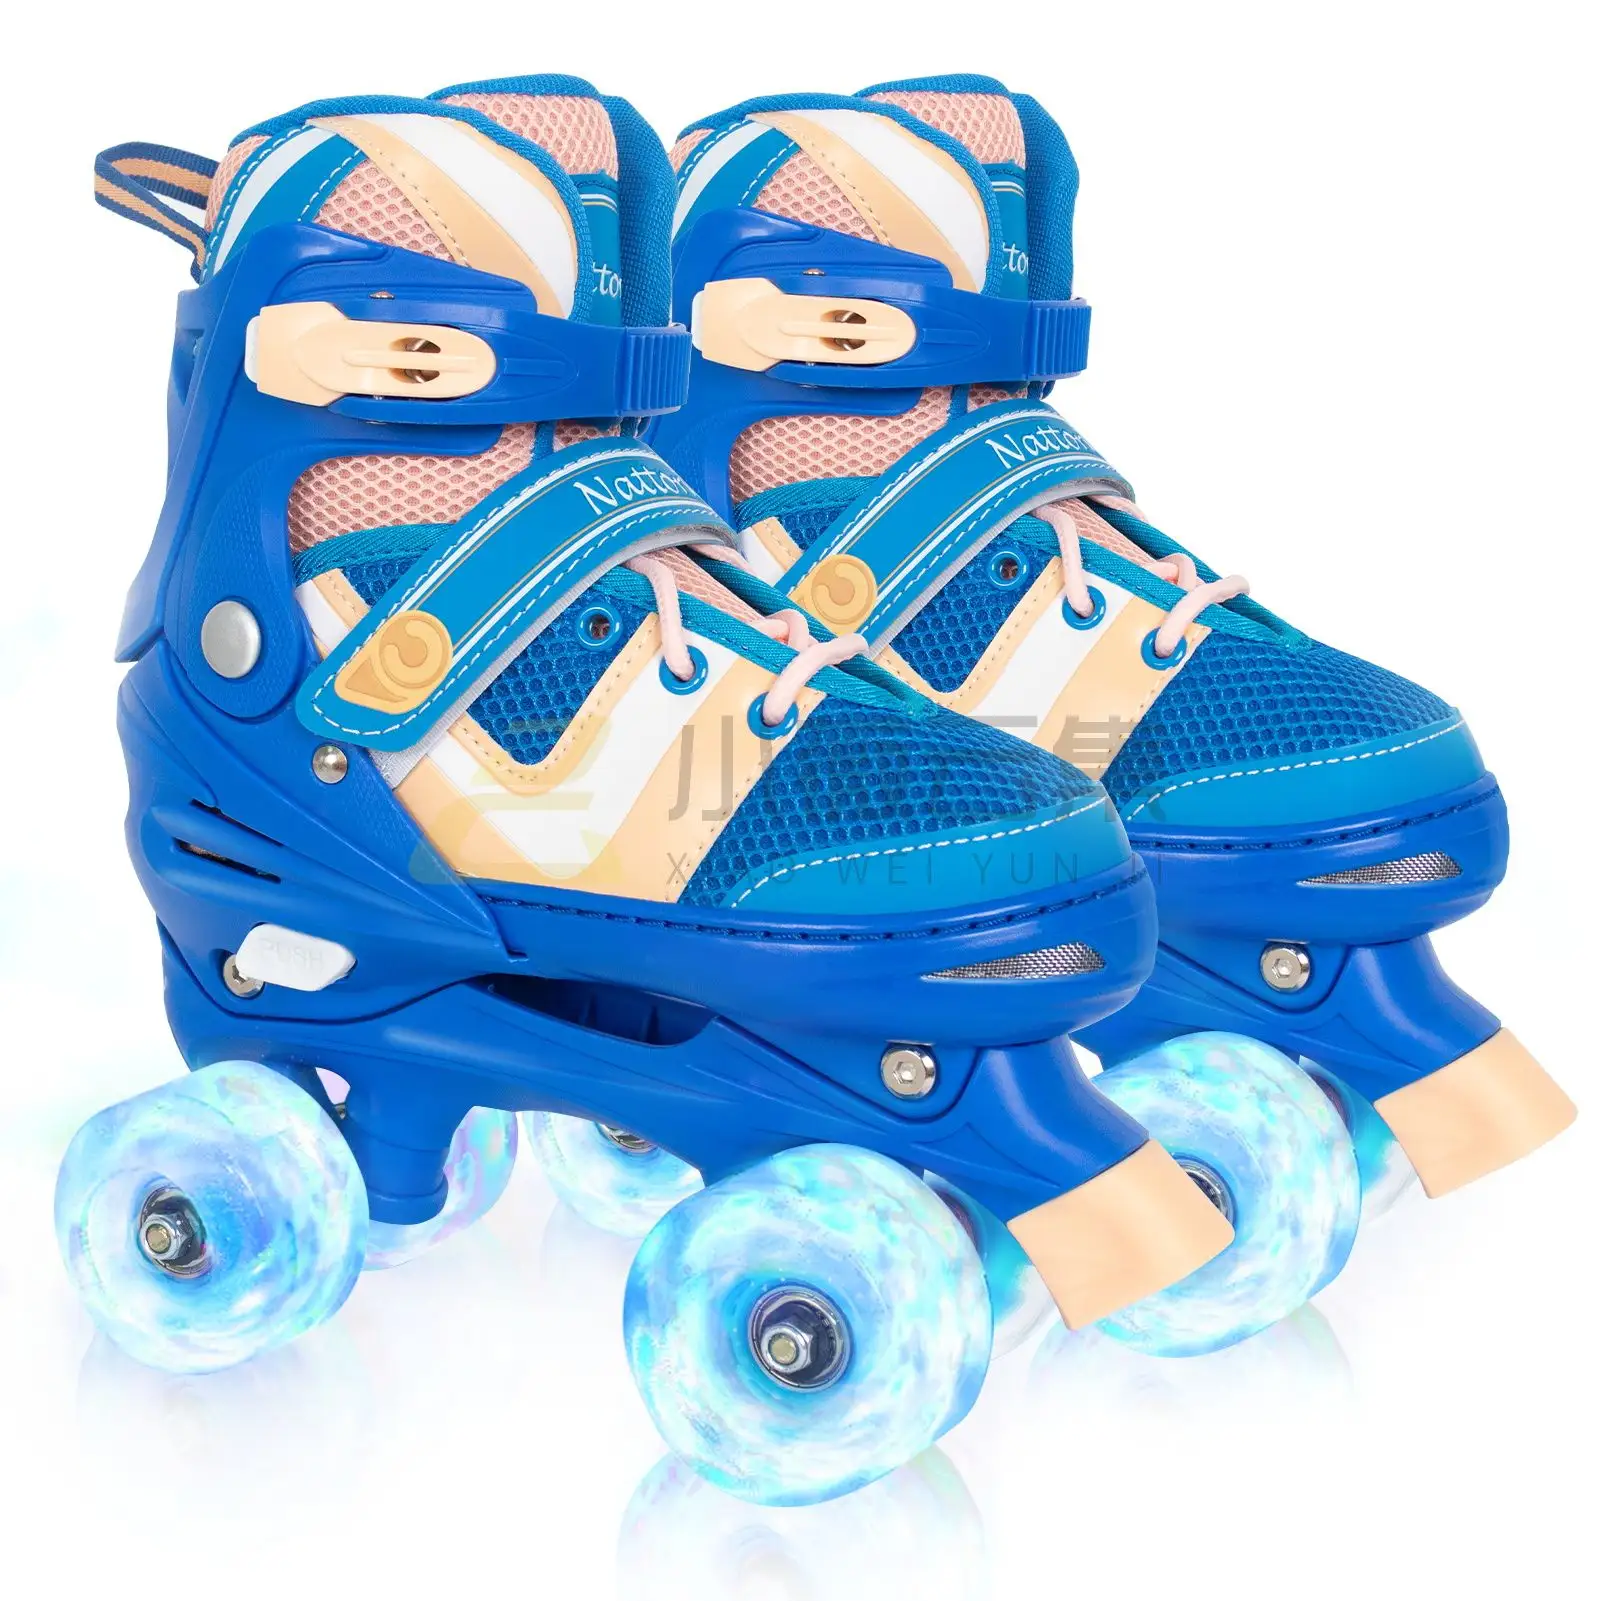 Premium Performance Roller Skates Shoes China Flash Roller Speed Skating Shoes For Girls Kids Child Toddler Beginners